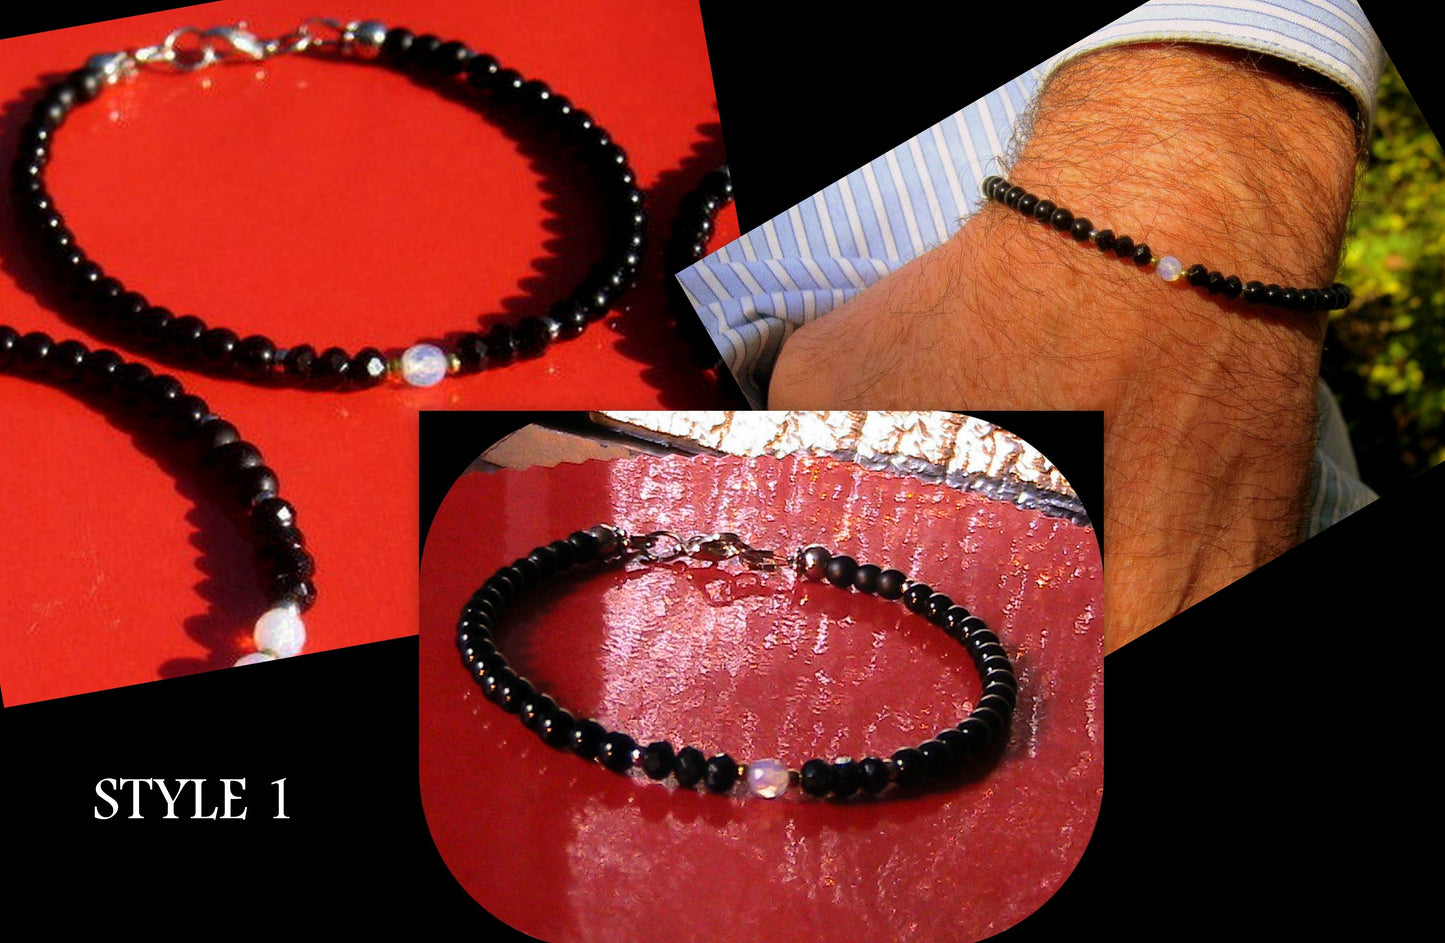 Men tiny OPAL Moonstone Onyx Tourmaline Spinel Black Diamond bracelet, protection precious which stone handmade slim bracelet men gift